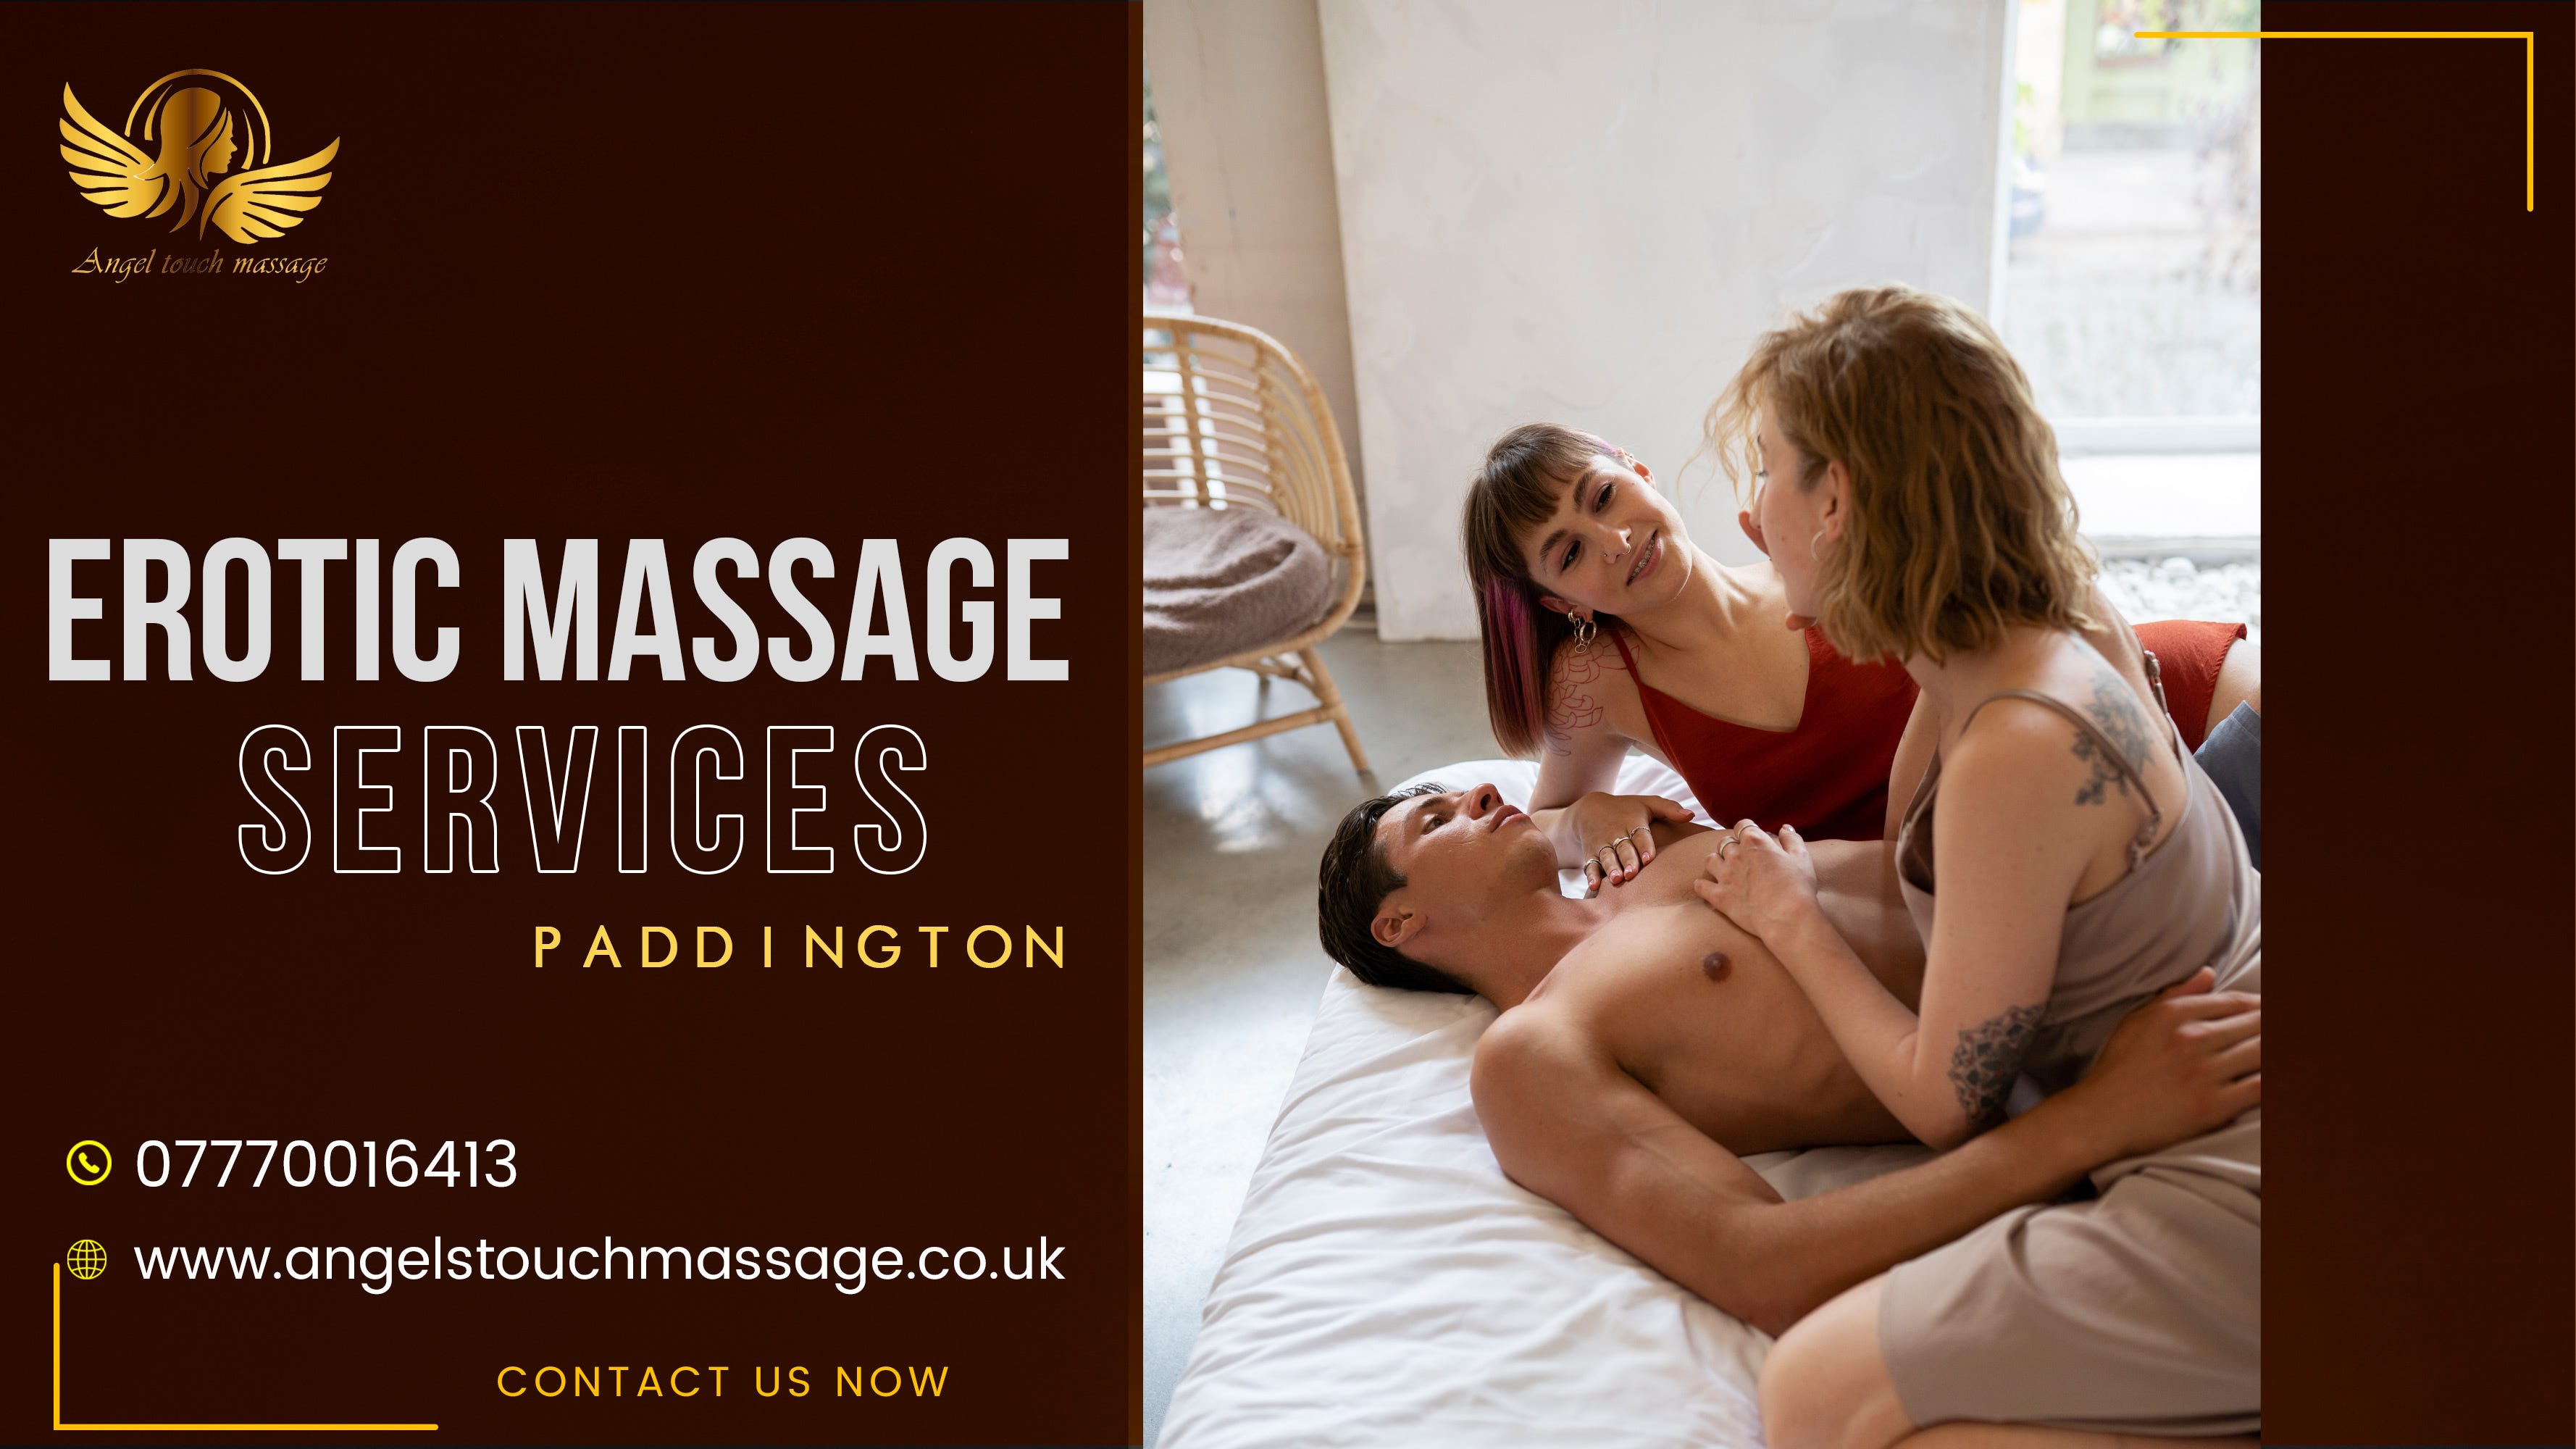 Adult massage services